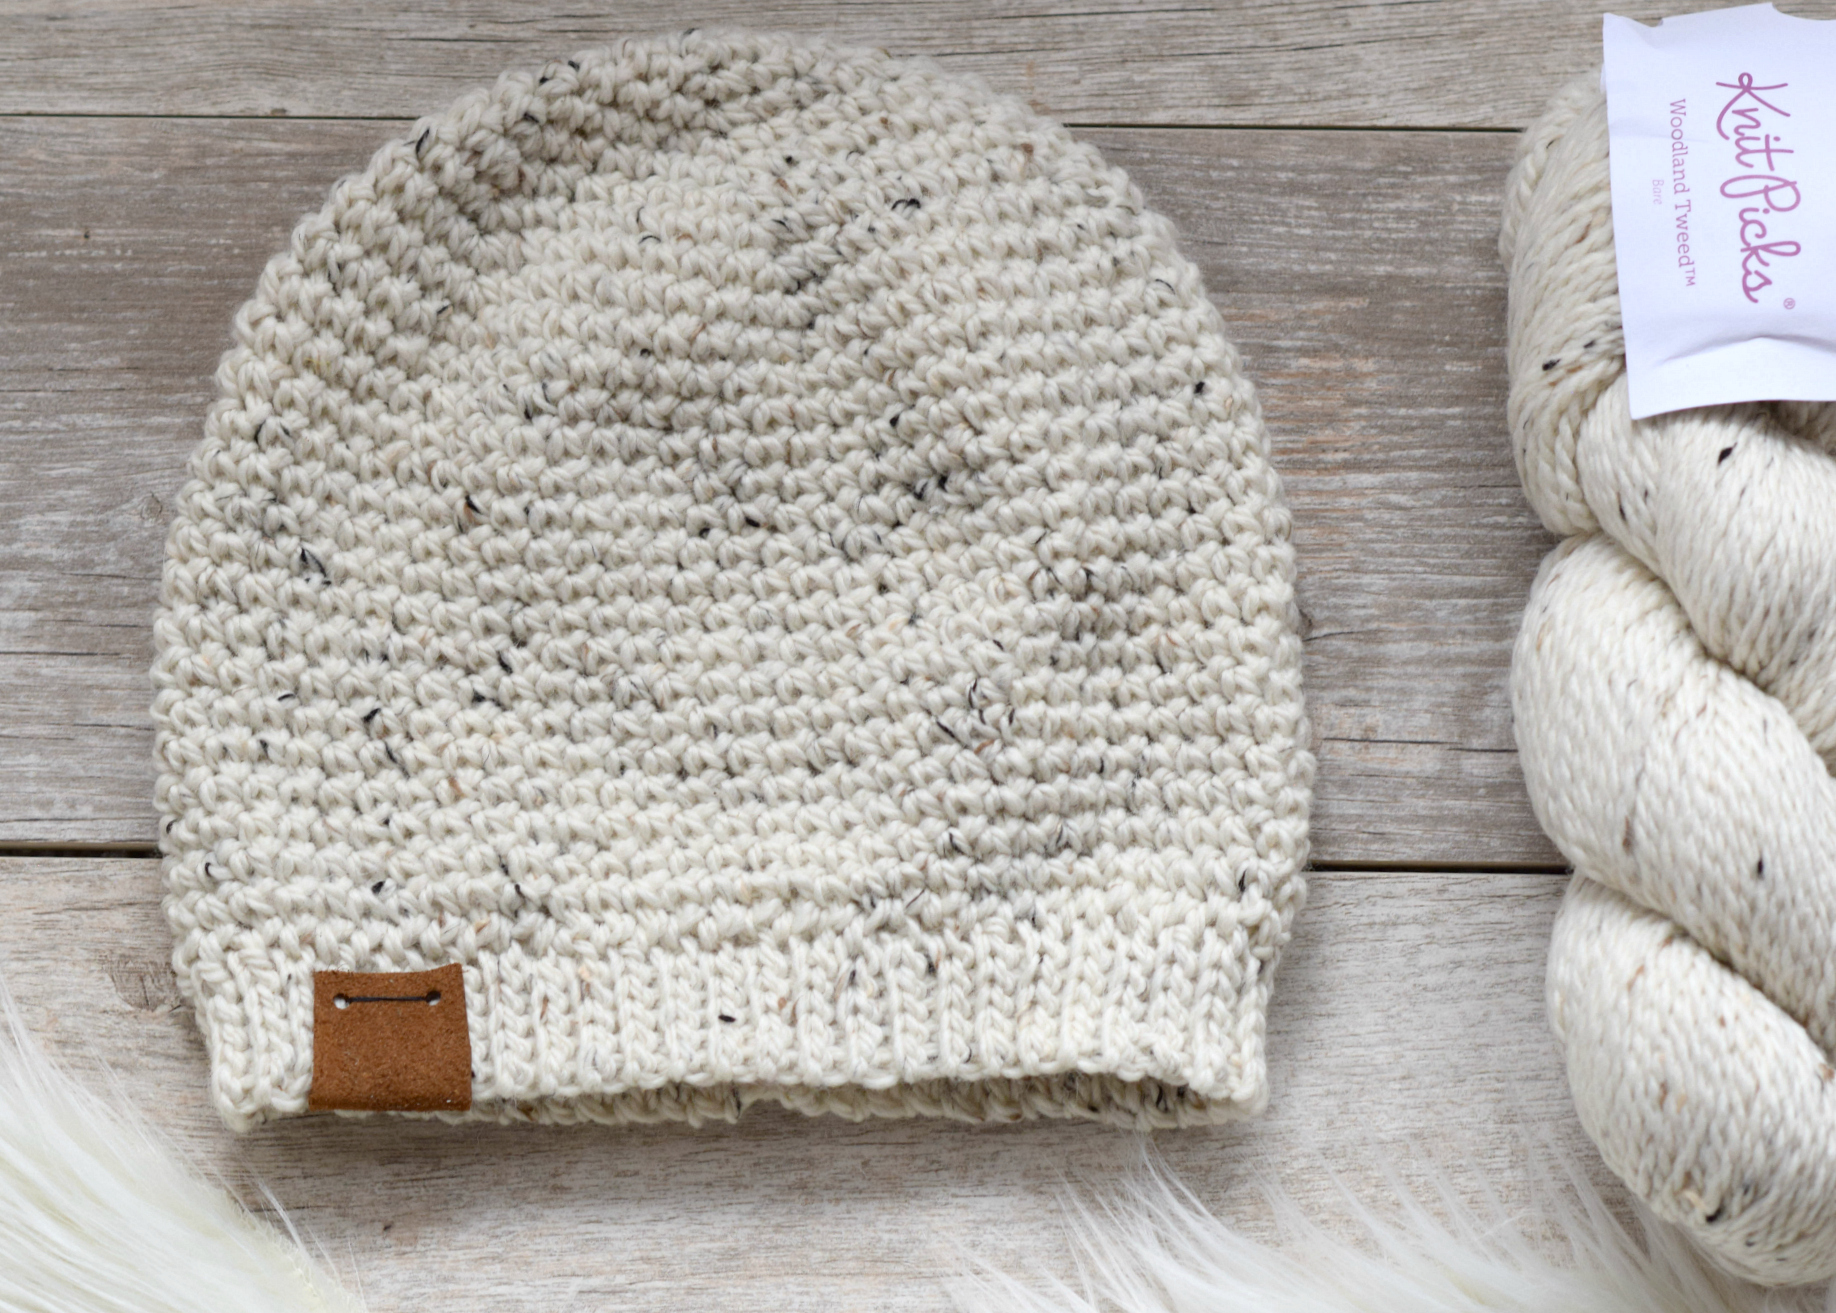 How do we feel about pompoms on men's hats? : r/crochet